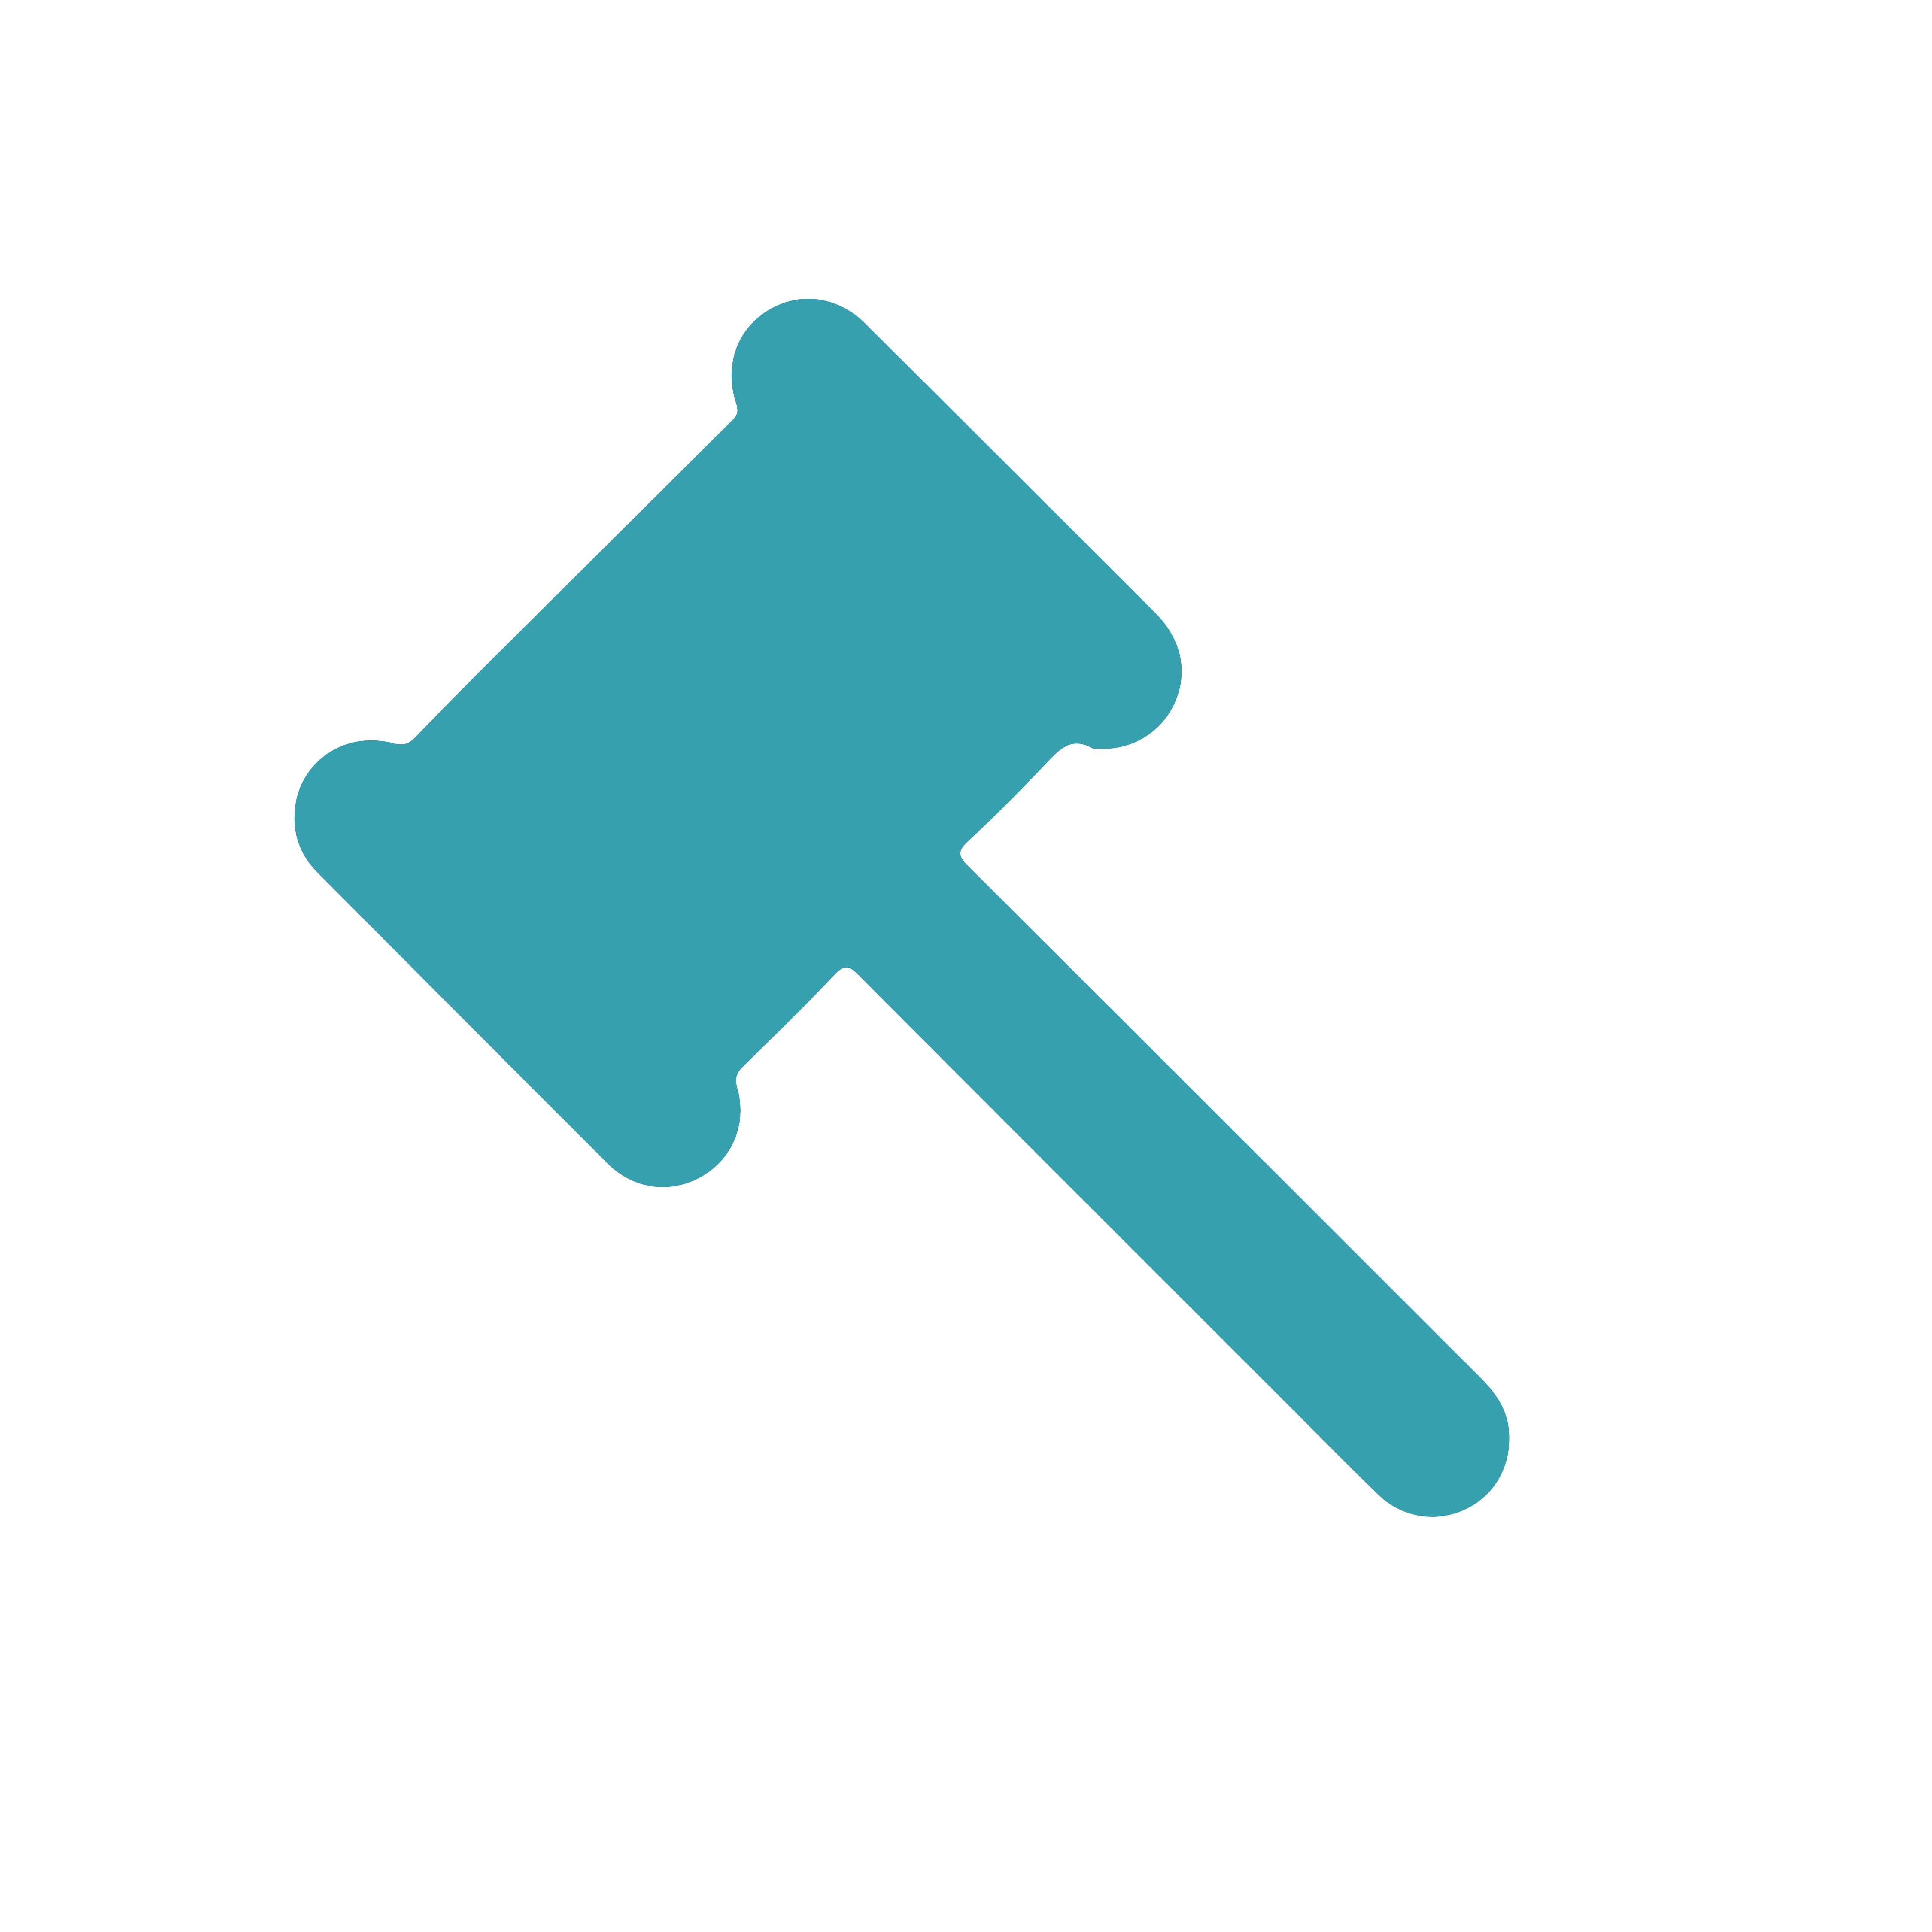 Probate - illusration representing the probate process, symbolizing legal procedures, estate administration, and asset distribution